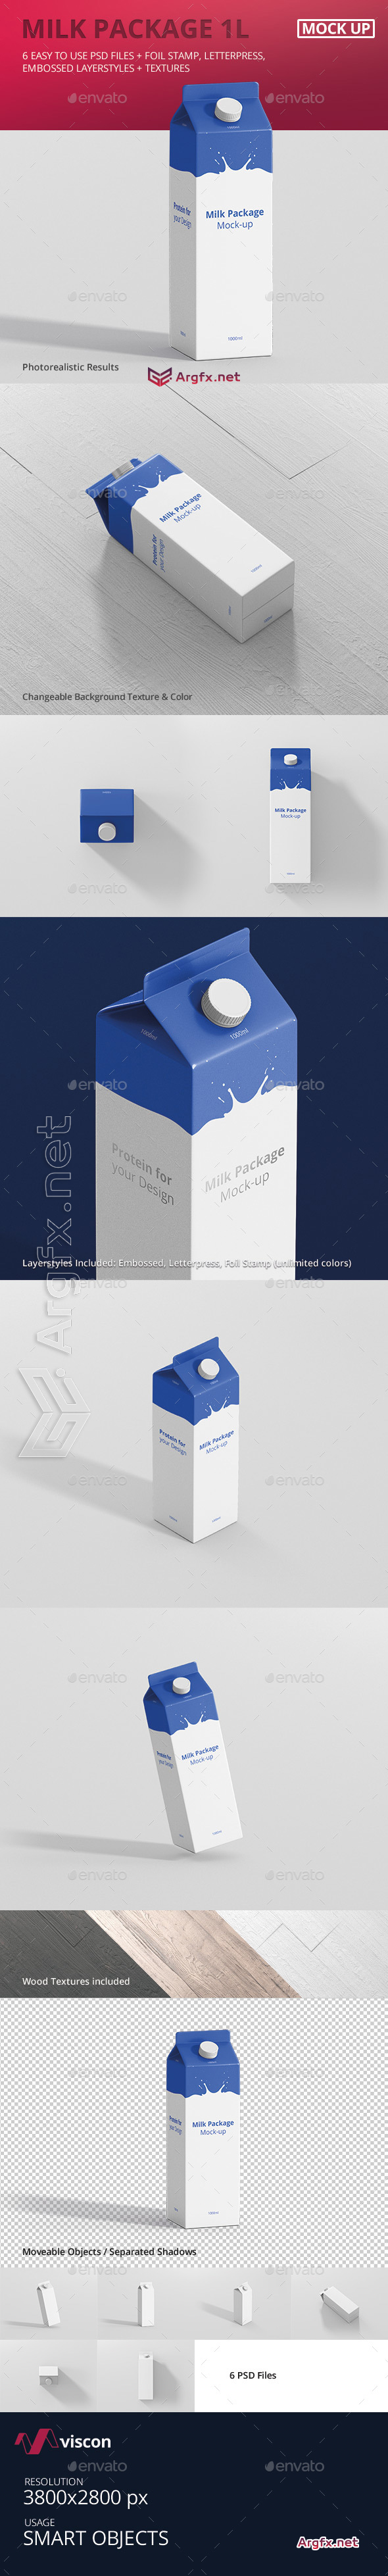 GR - Juice / Milk Mockup - 1L Carton Box 18160970